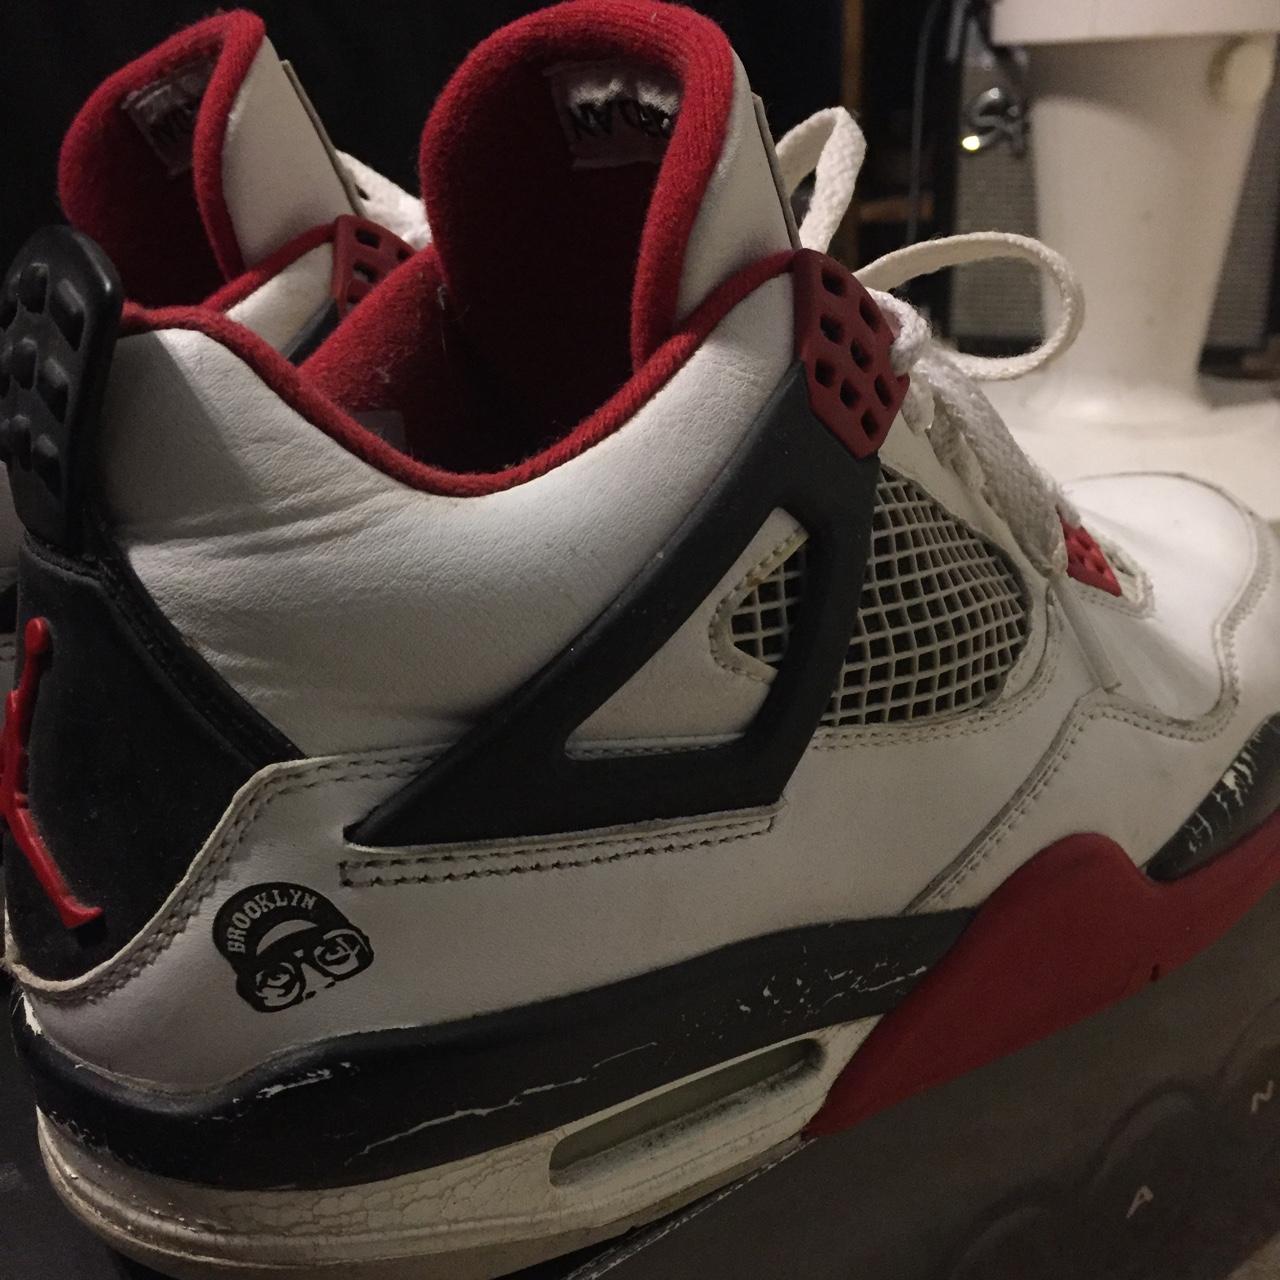 Size 8 Spike Lee Fire Red 4s #Jordan #Nike #FireRed - Depop